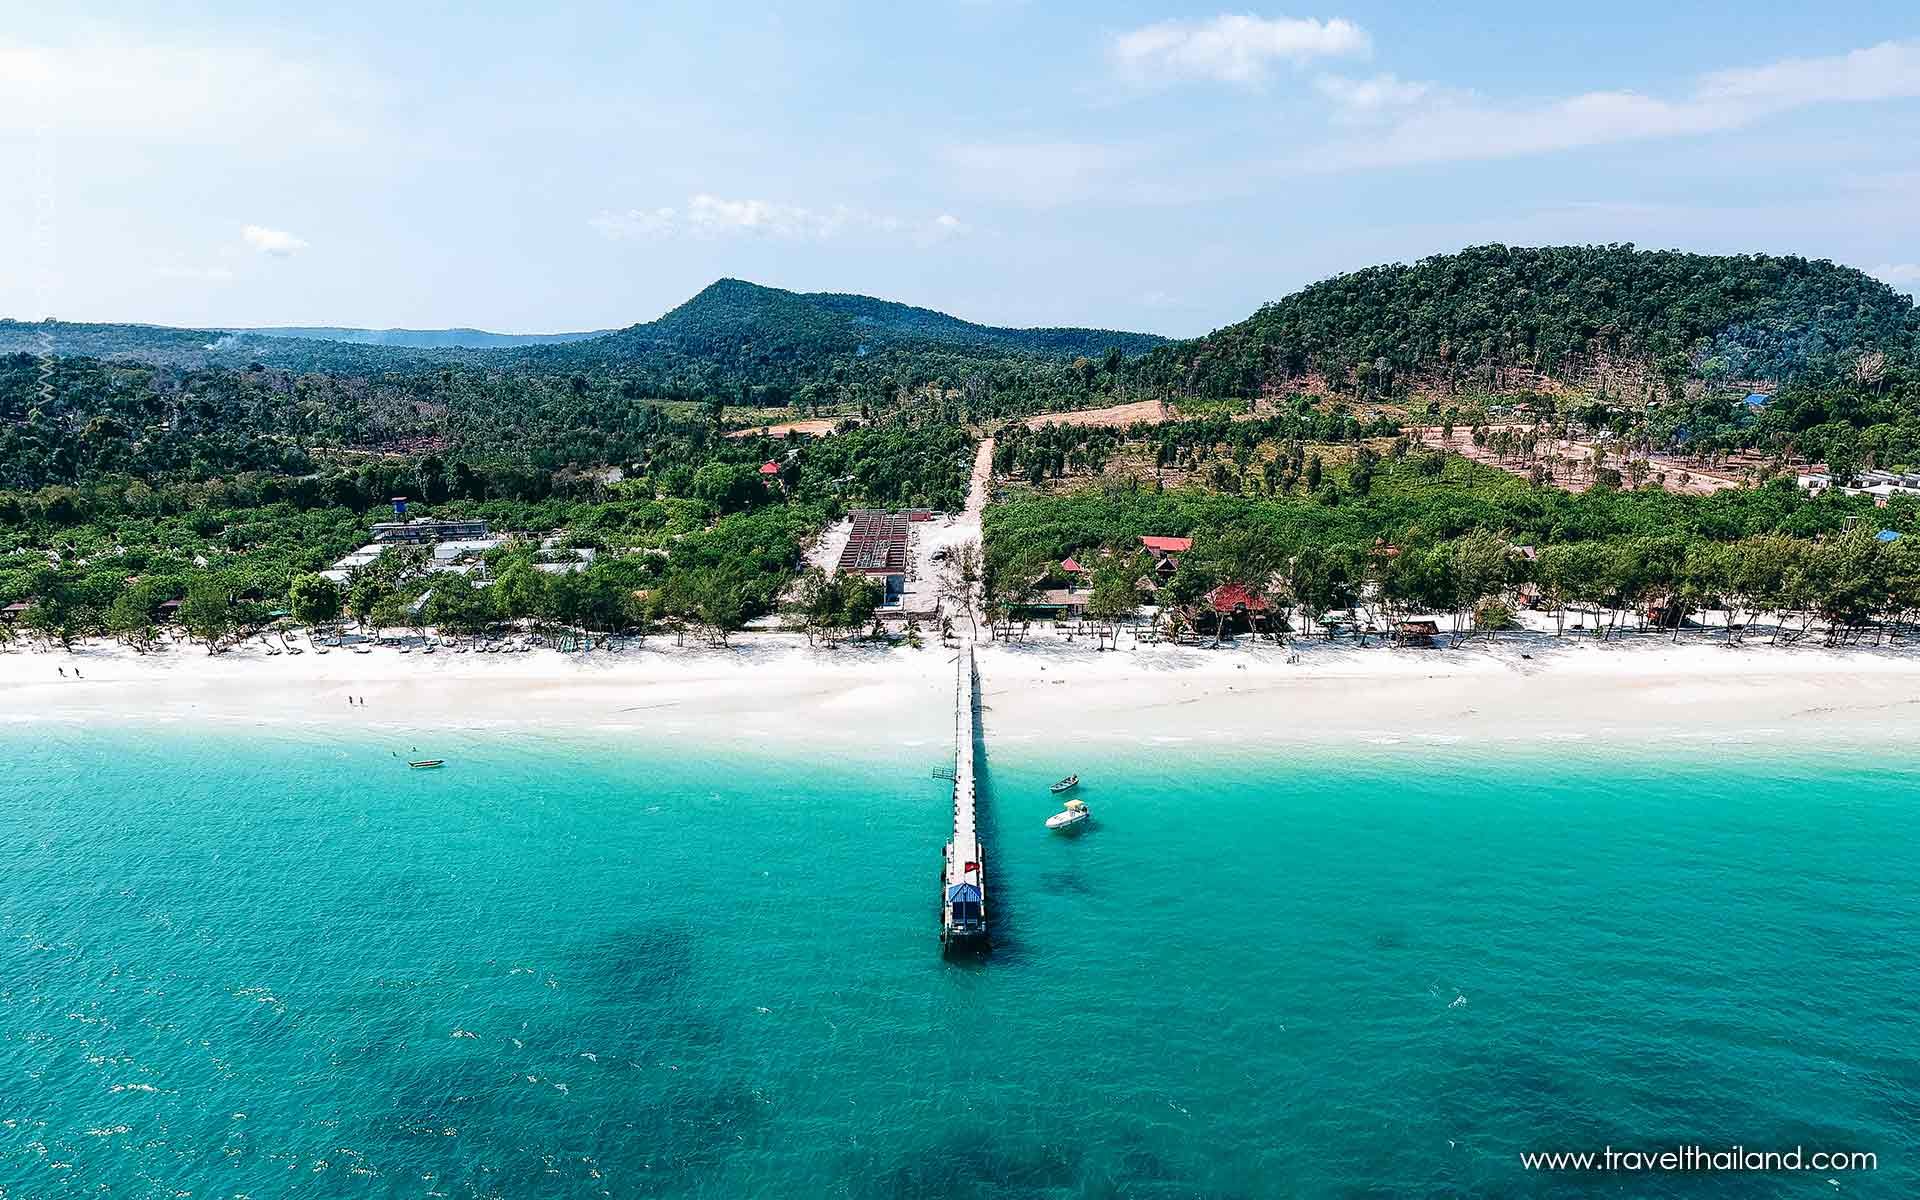 Luxury Thailand & Cambodia 10 days